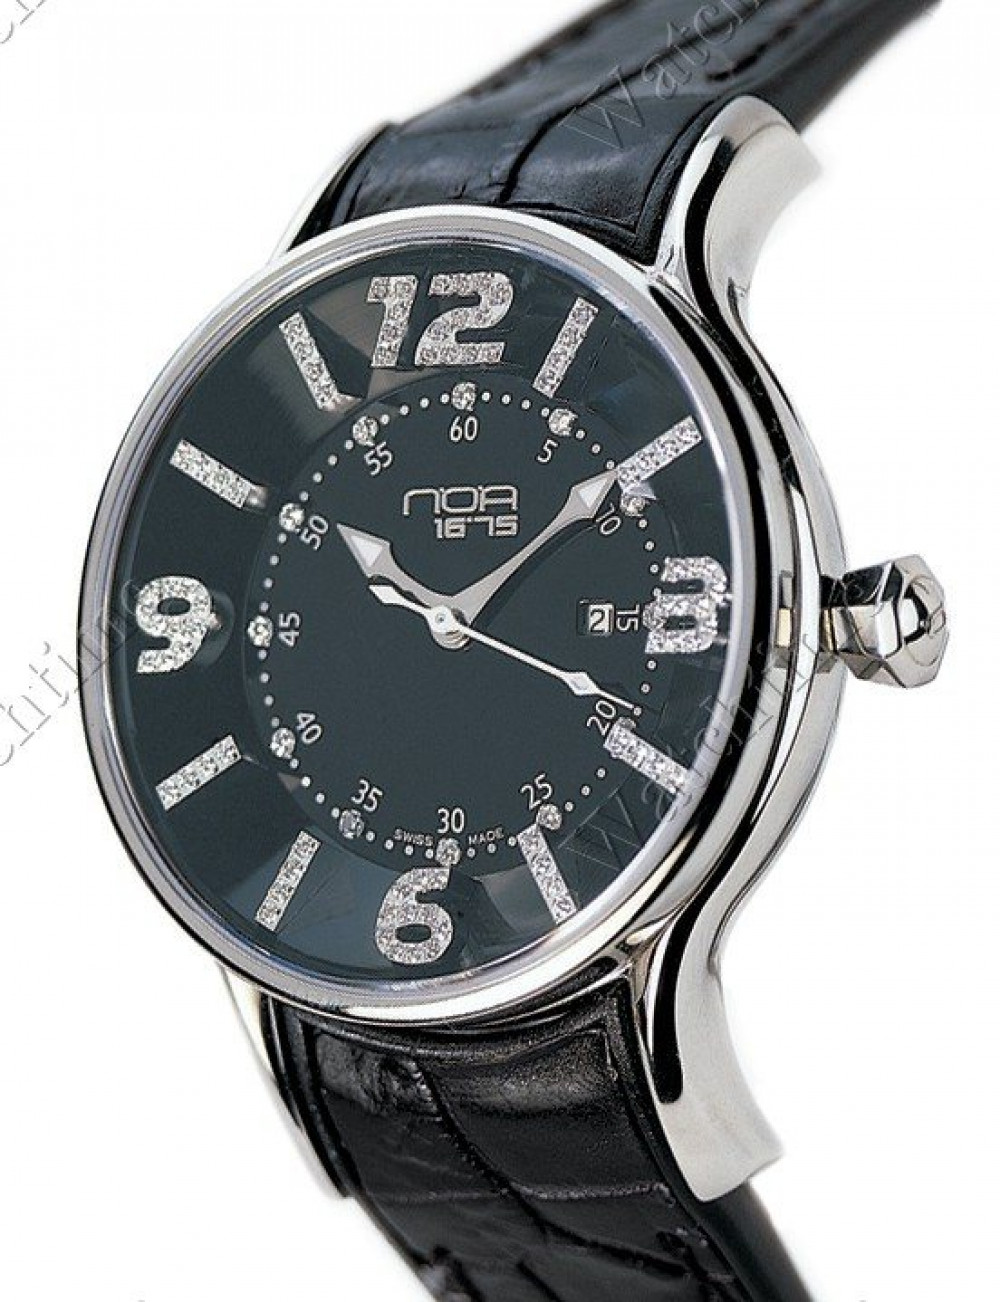 Zegarek firmy N.O.A, model 16.75 LDB003